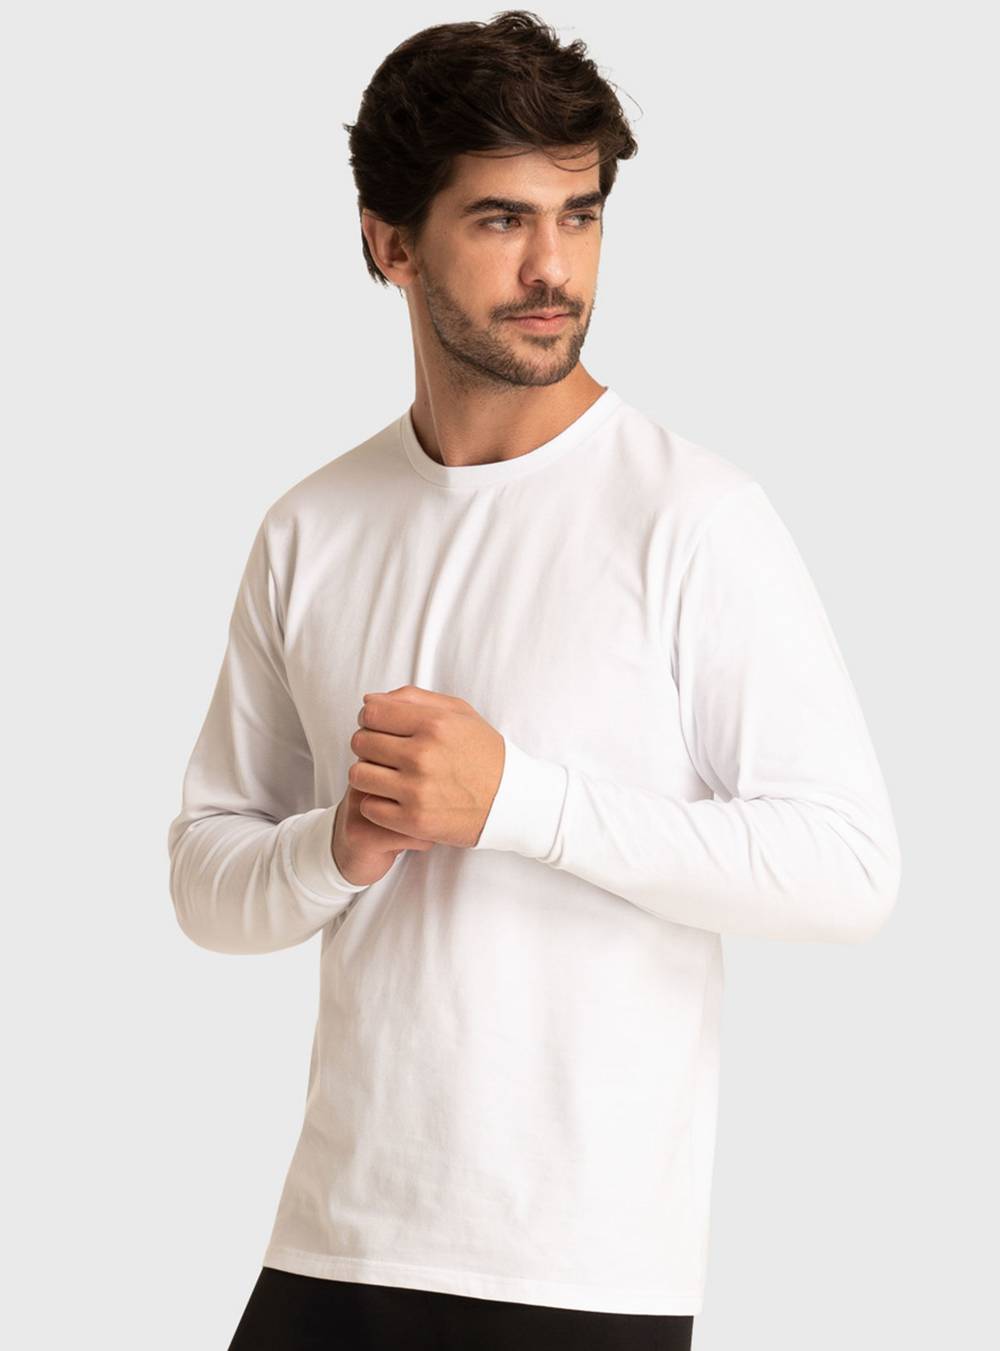 Top pack camiseta algodón (talla m/blanco)